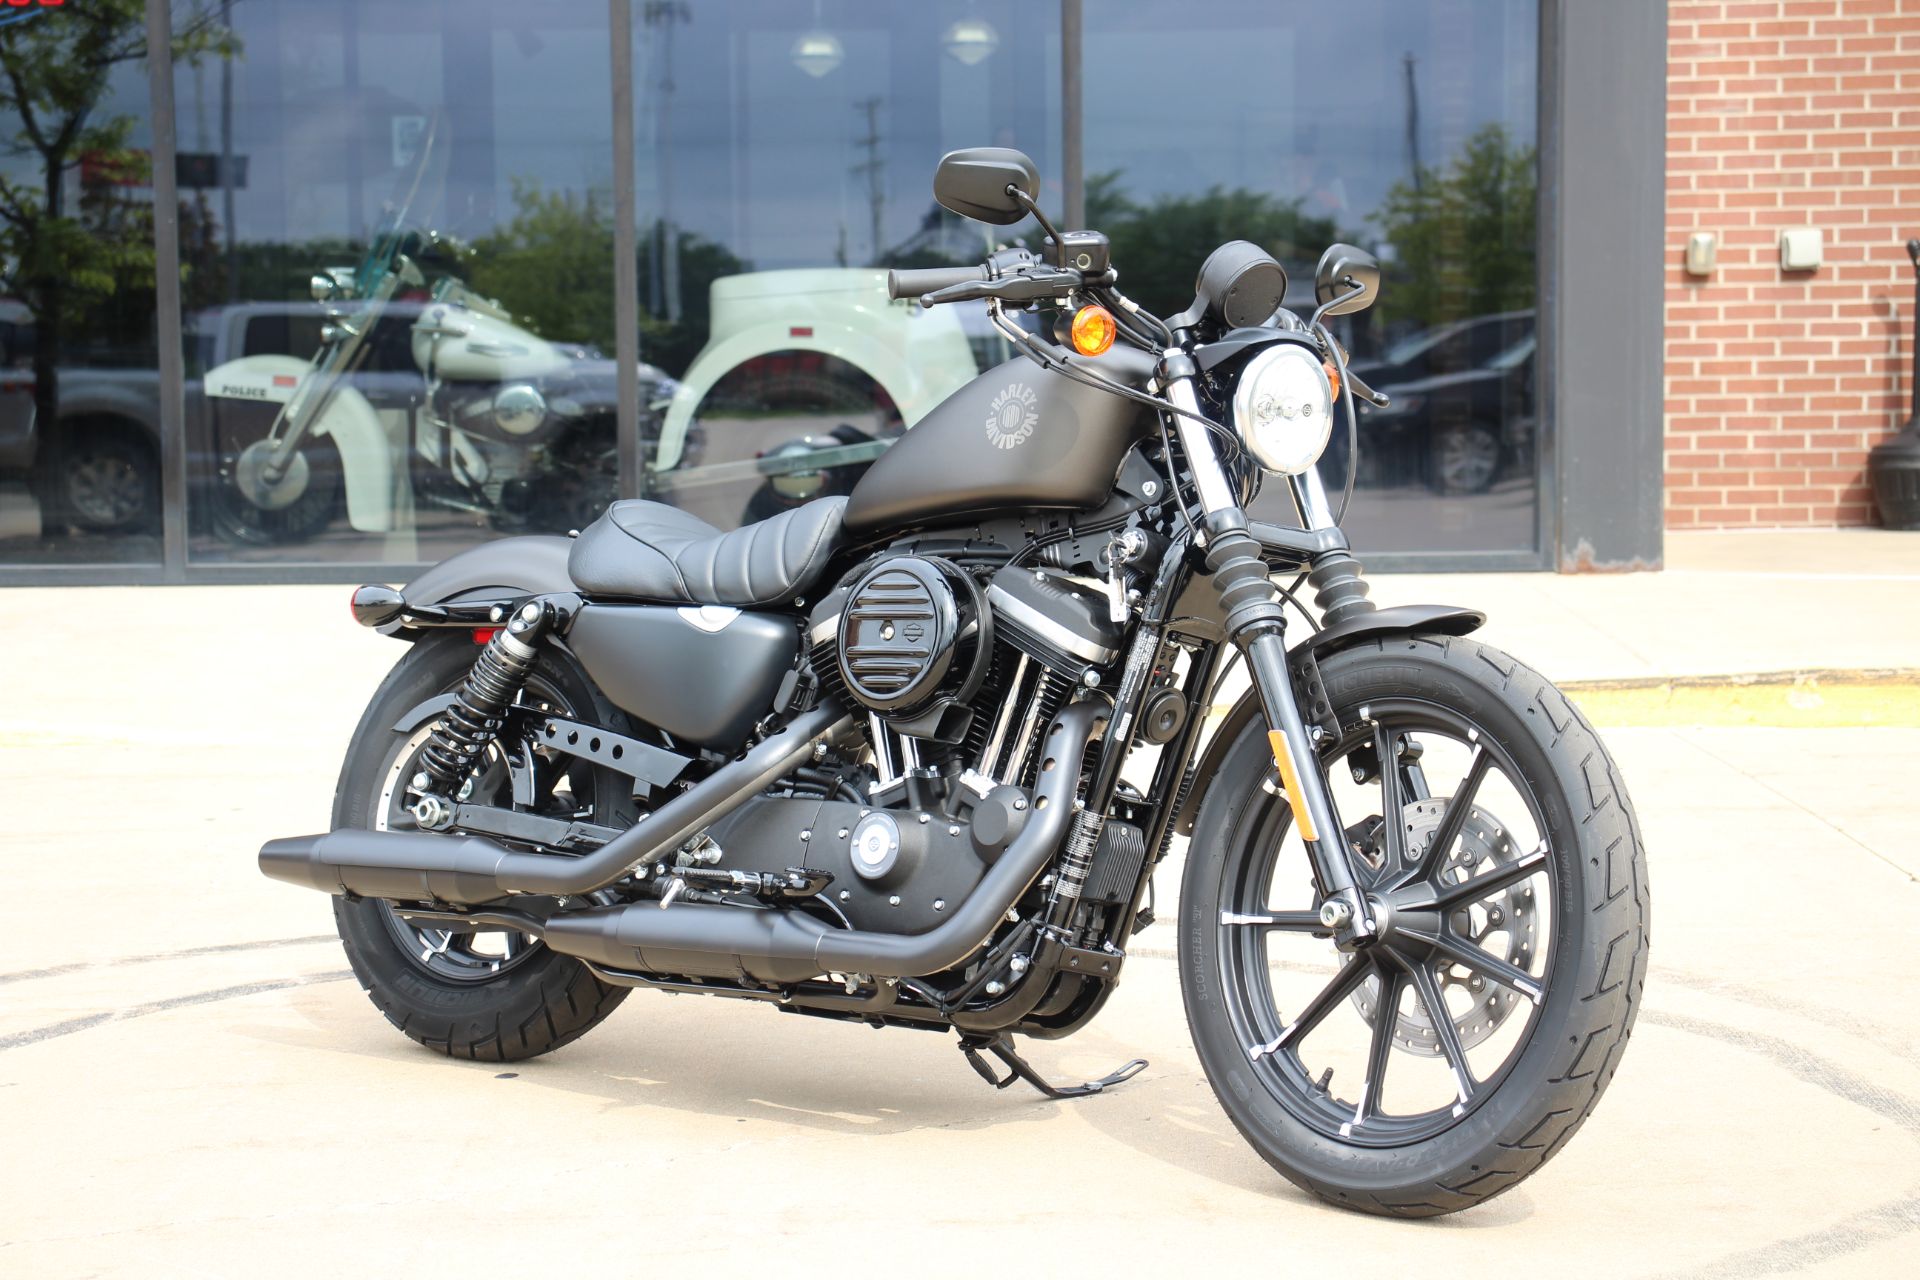 New 2022 HarleyDavidson Iron 883  Motorcycles in Flint MI  P7321 Black  Denim